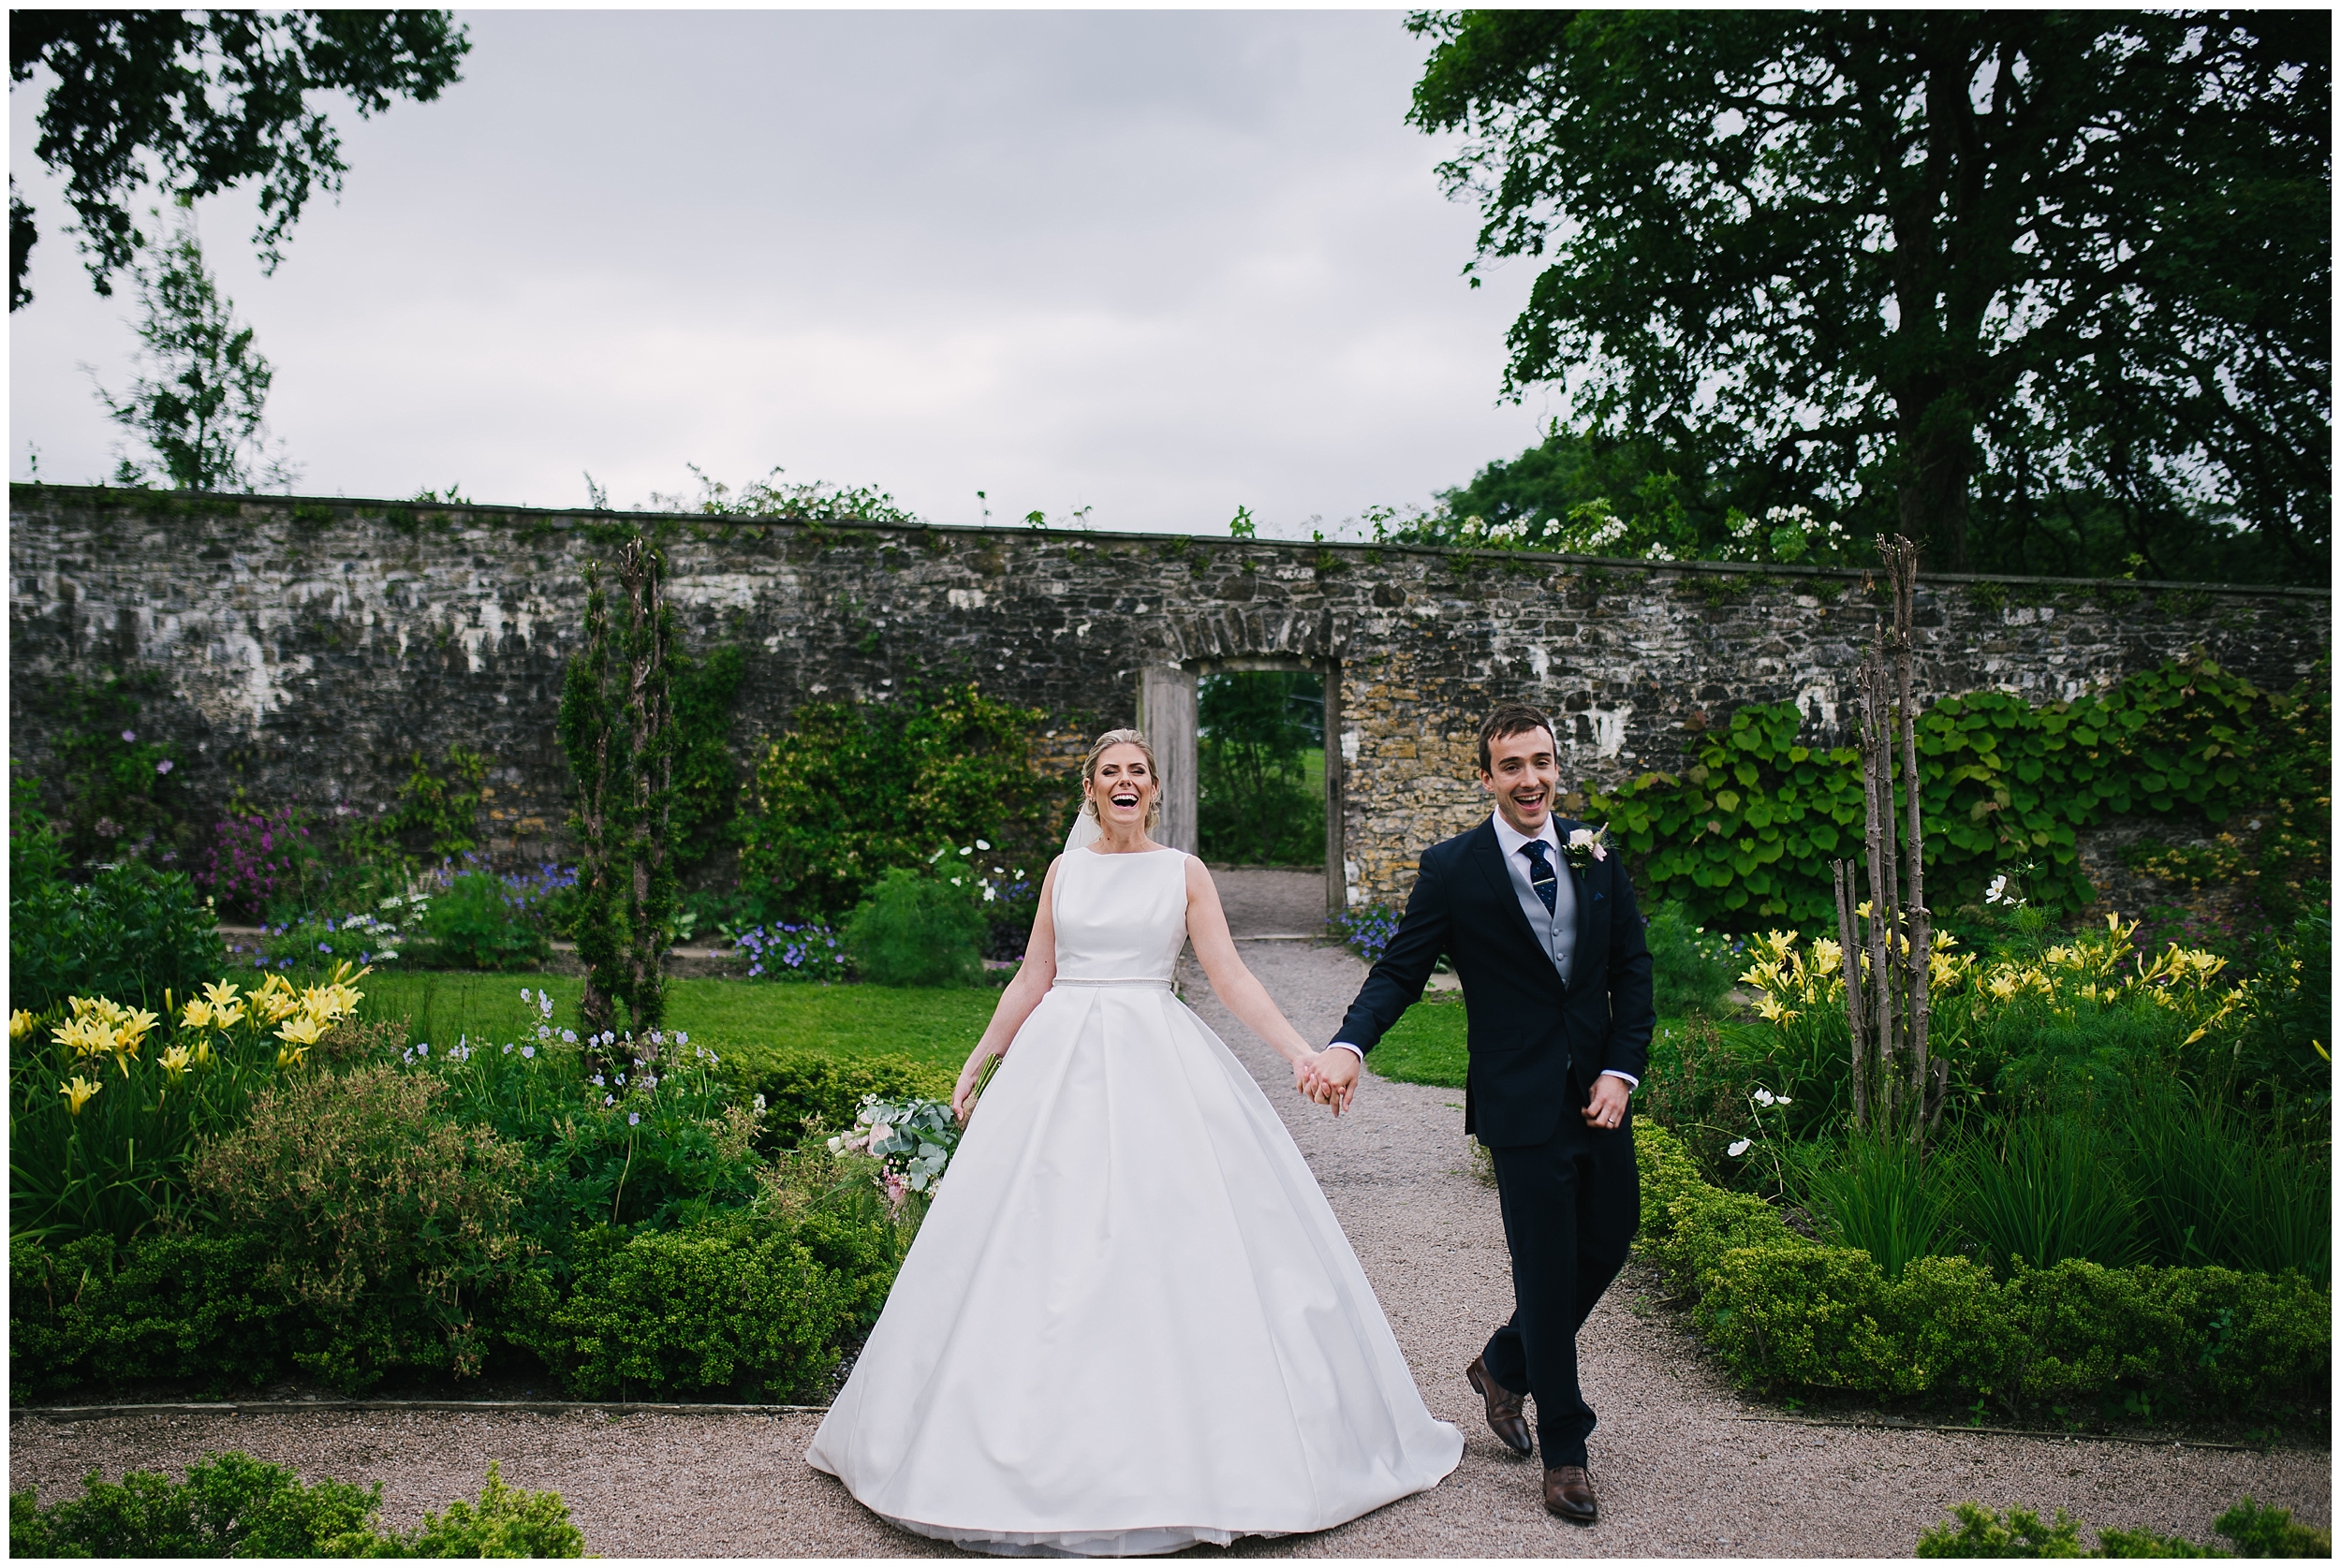 A west wales wedding at aberglasney gardens